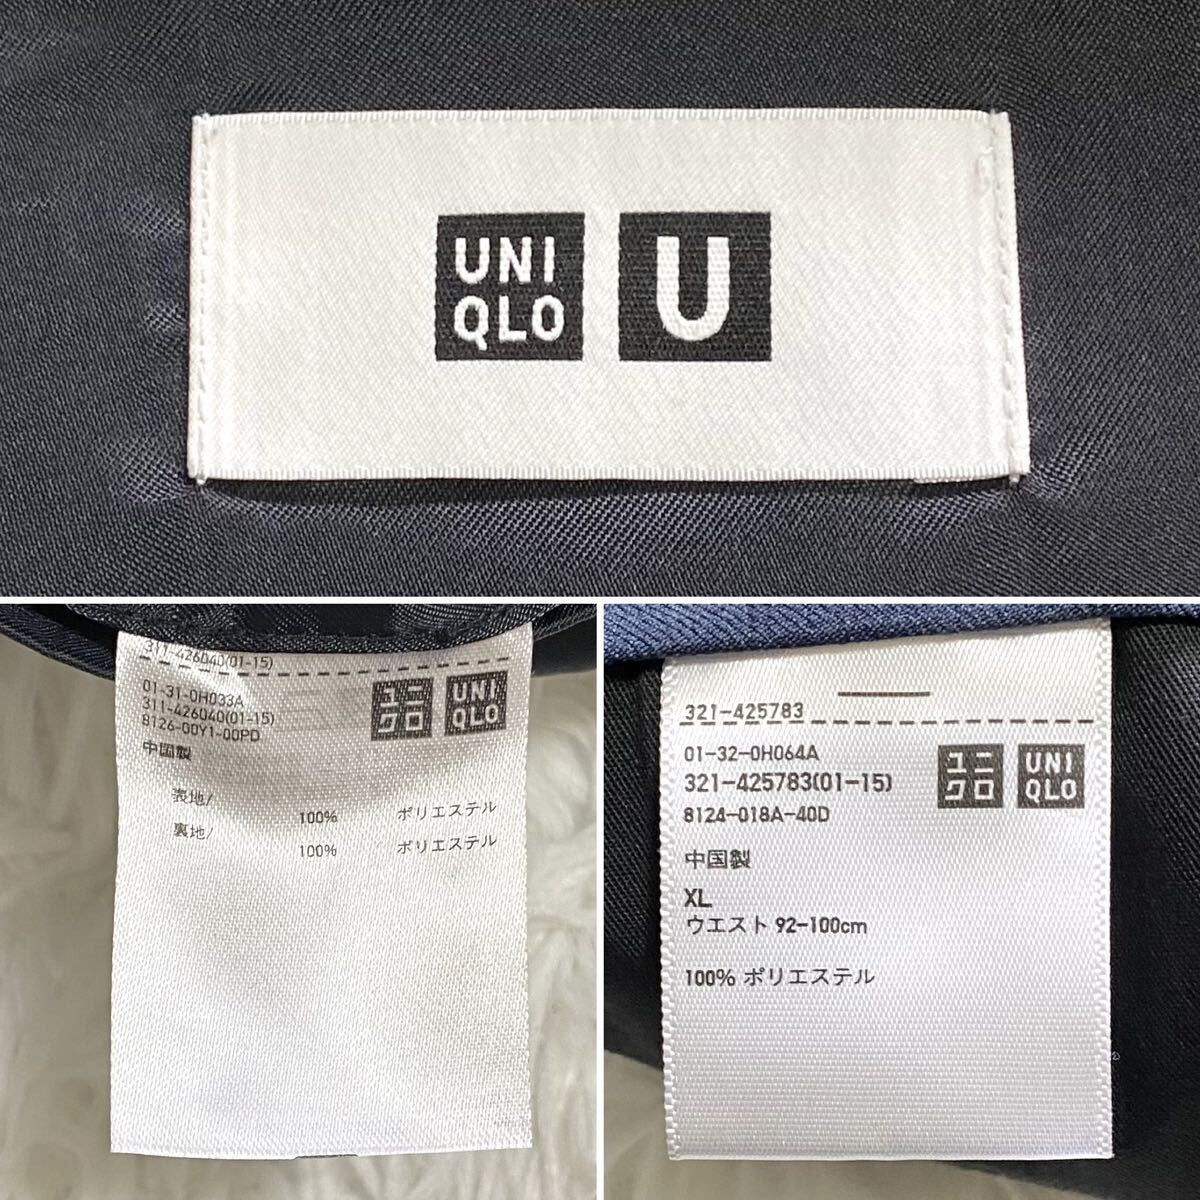 UNIQLO U ユニクロユー スーツ セットアップ XL 大きいサイズLL ネイビー ツイル素材 リラックスフィット パリデザイナーチーム監修スーツ_画像10